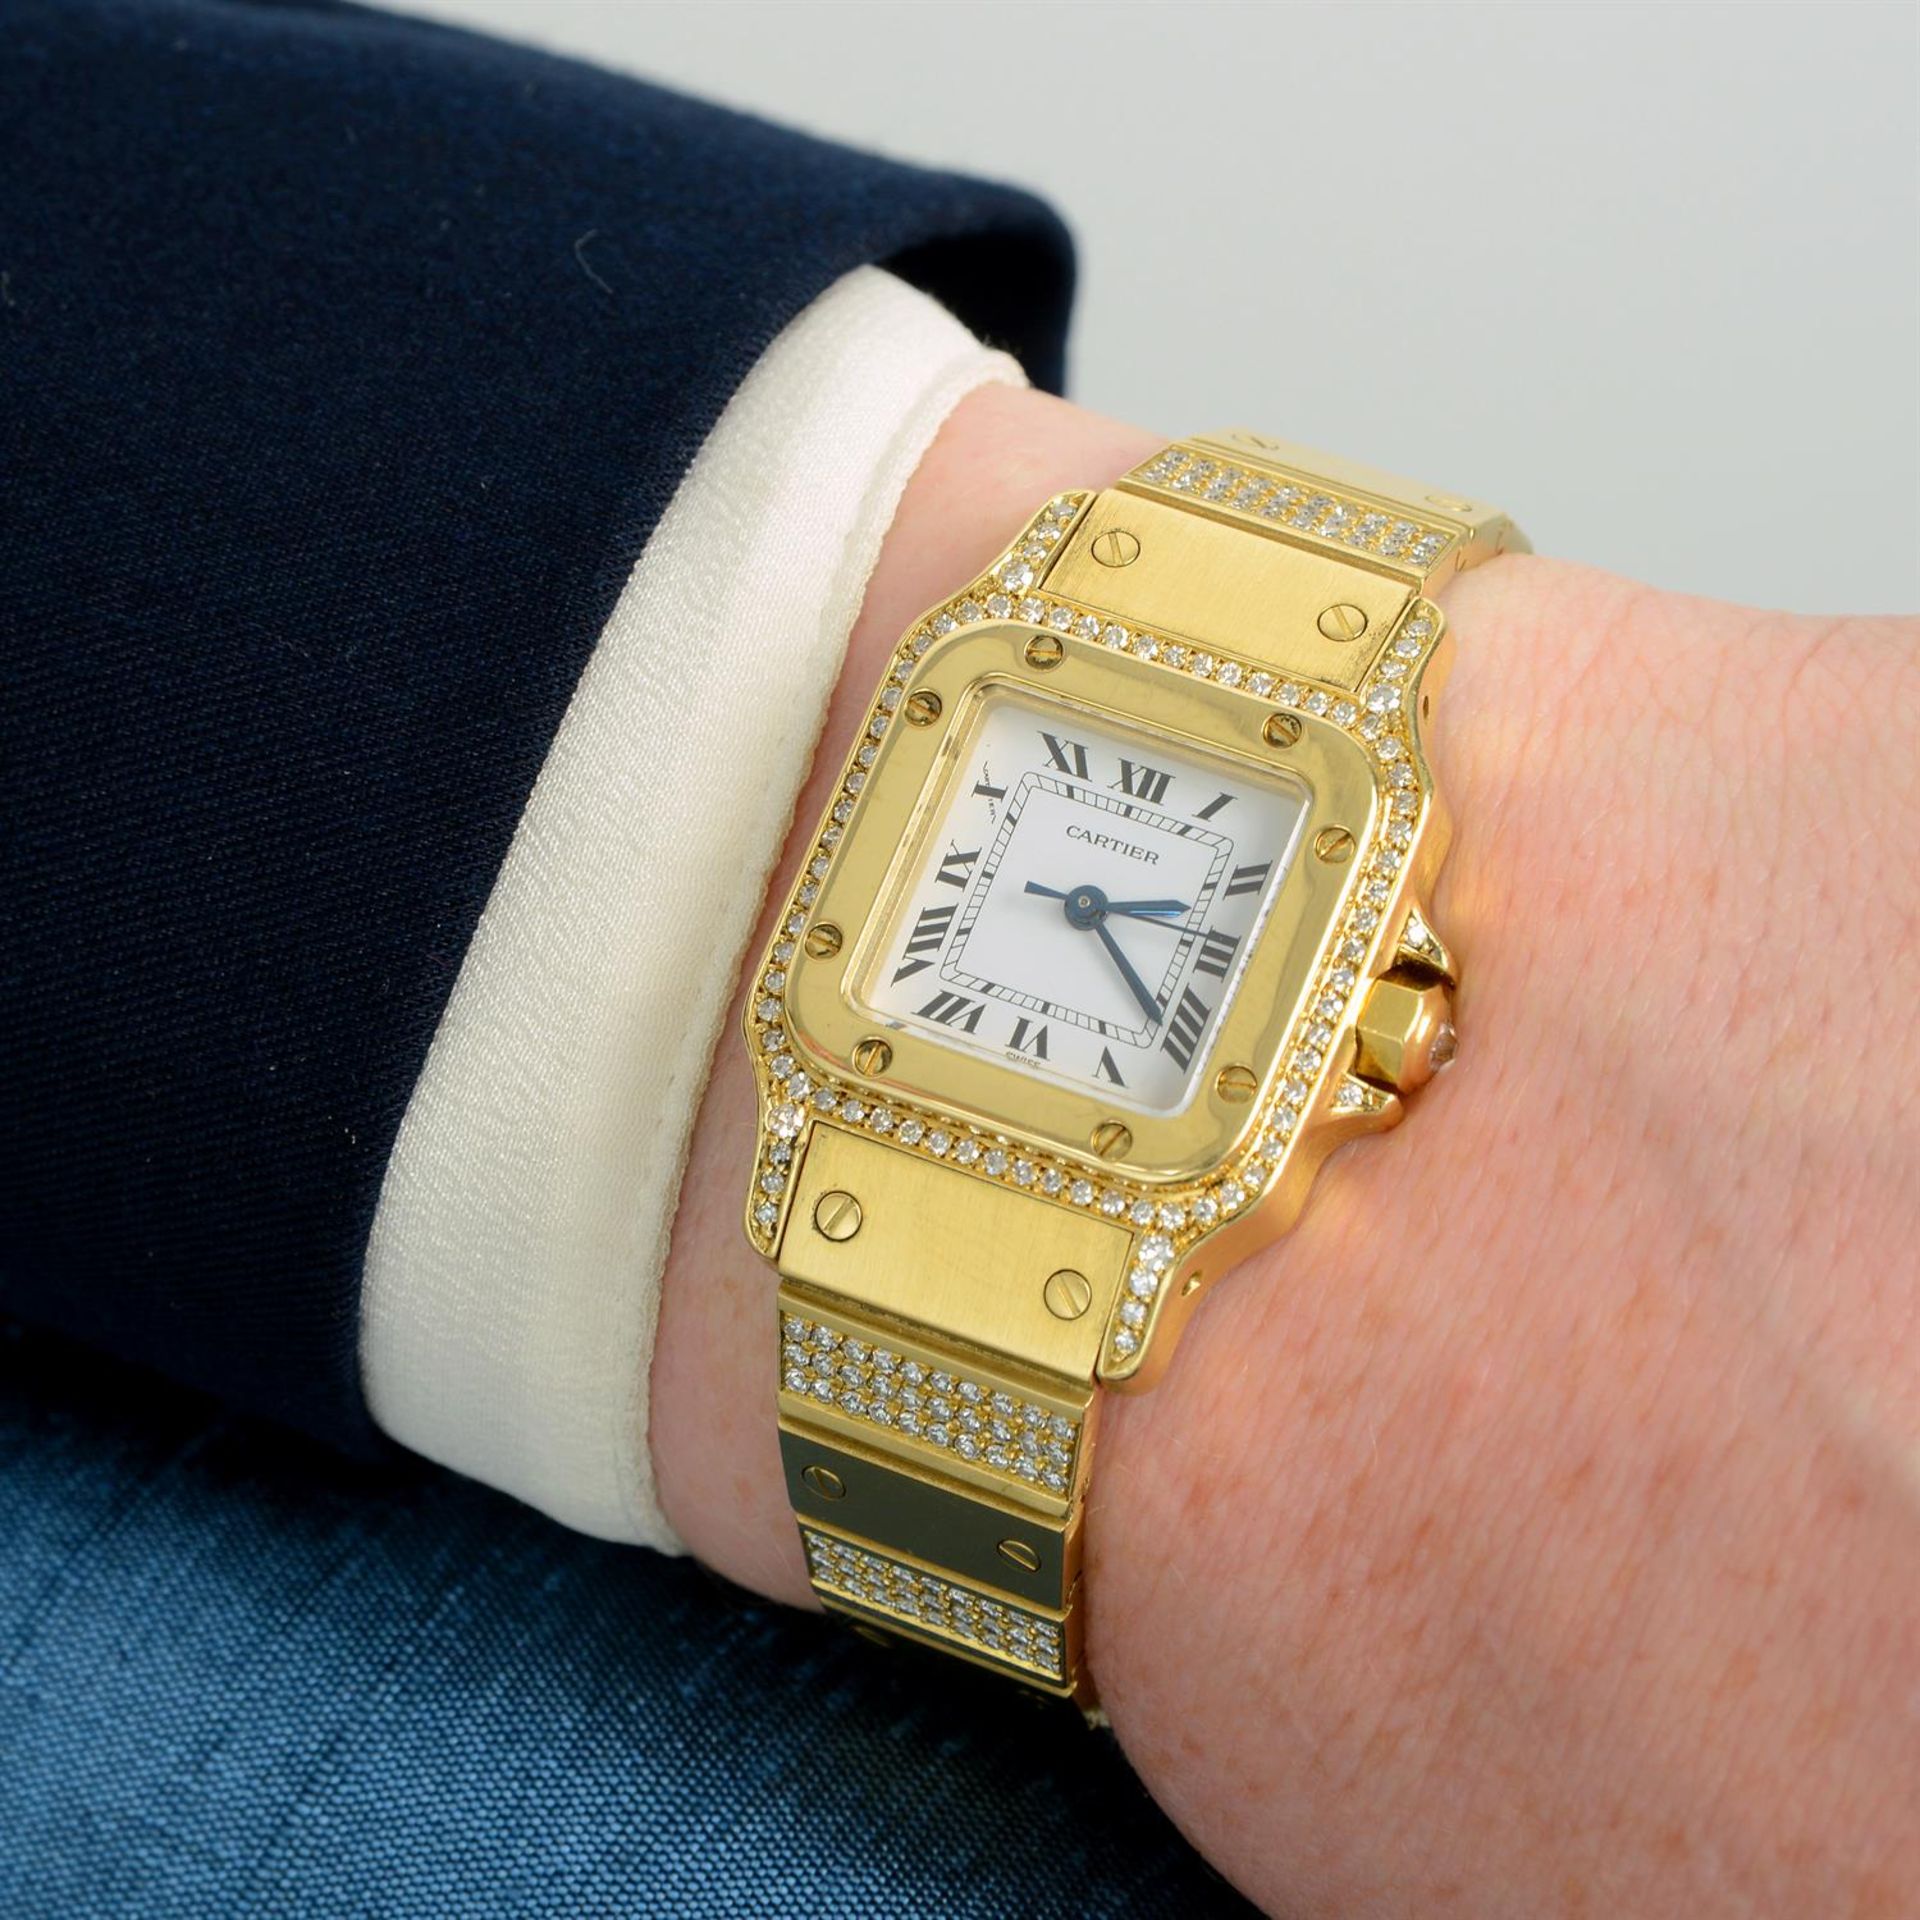 CARTIER - an 18ct gold diamond set Santos bracelet watch, 24mm. - Image 5 of 5